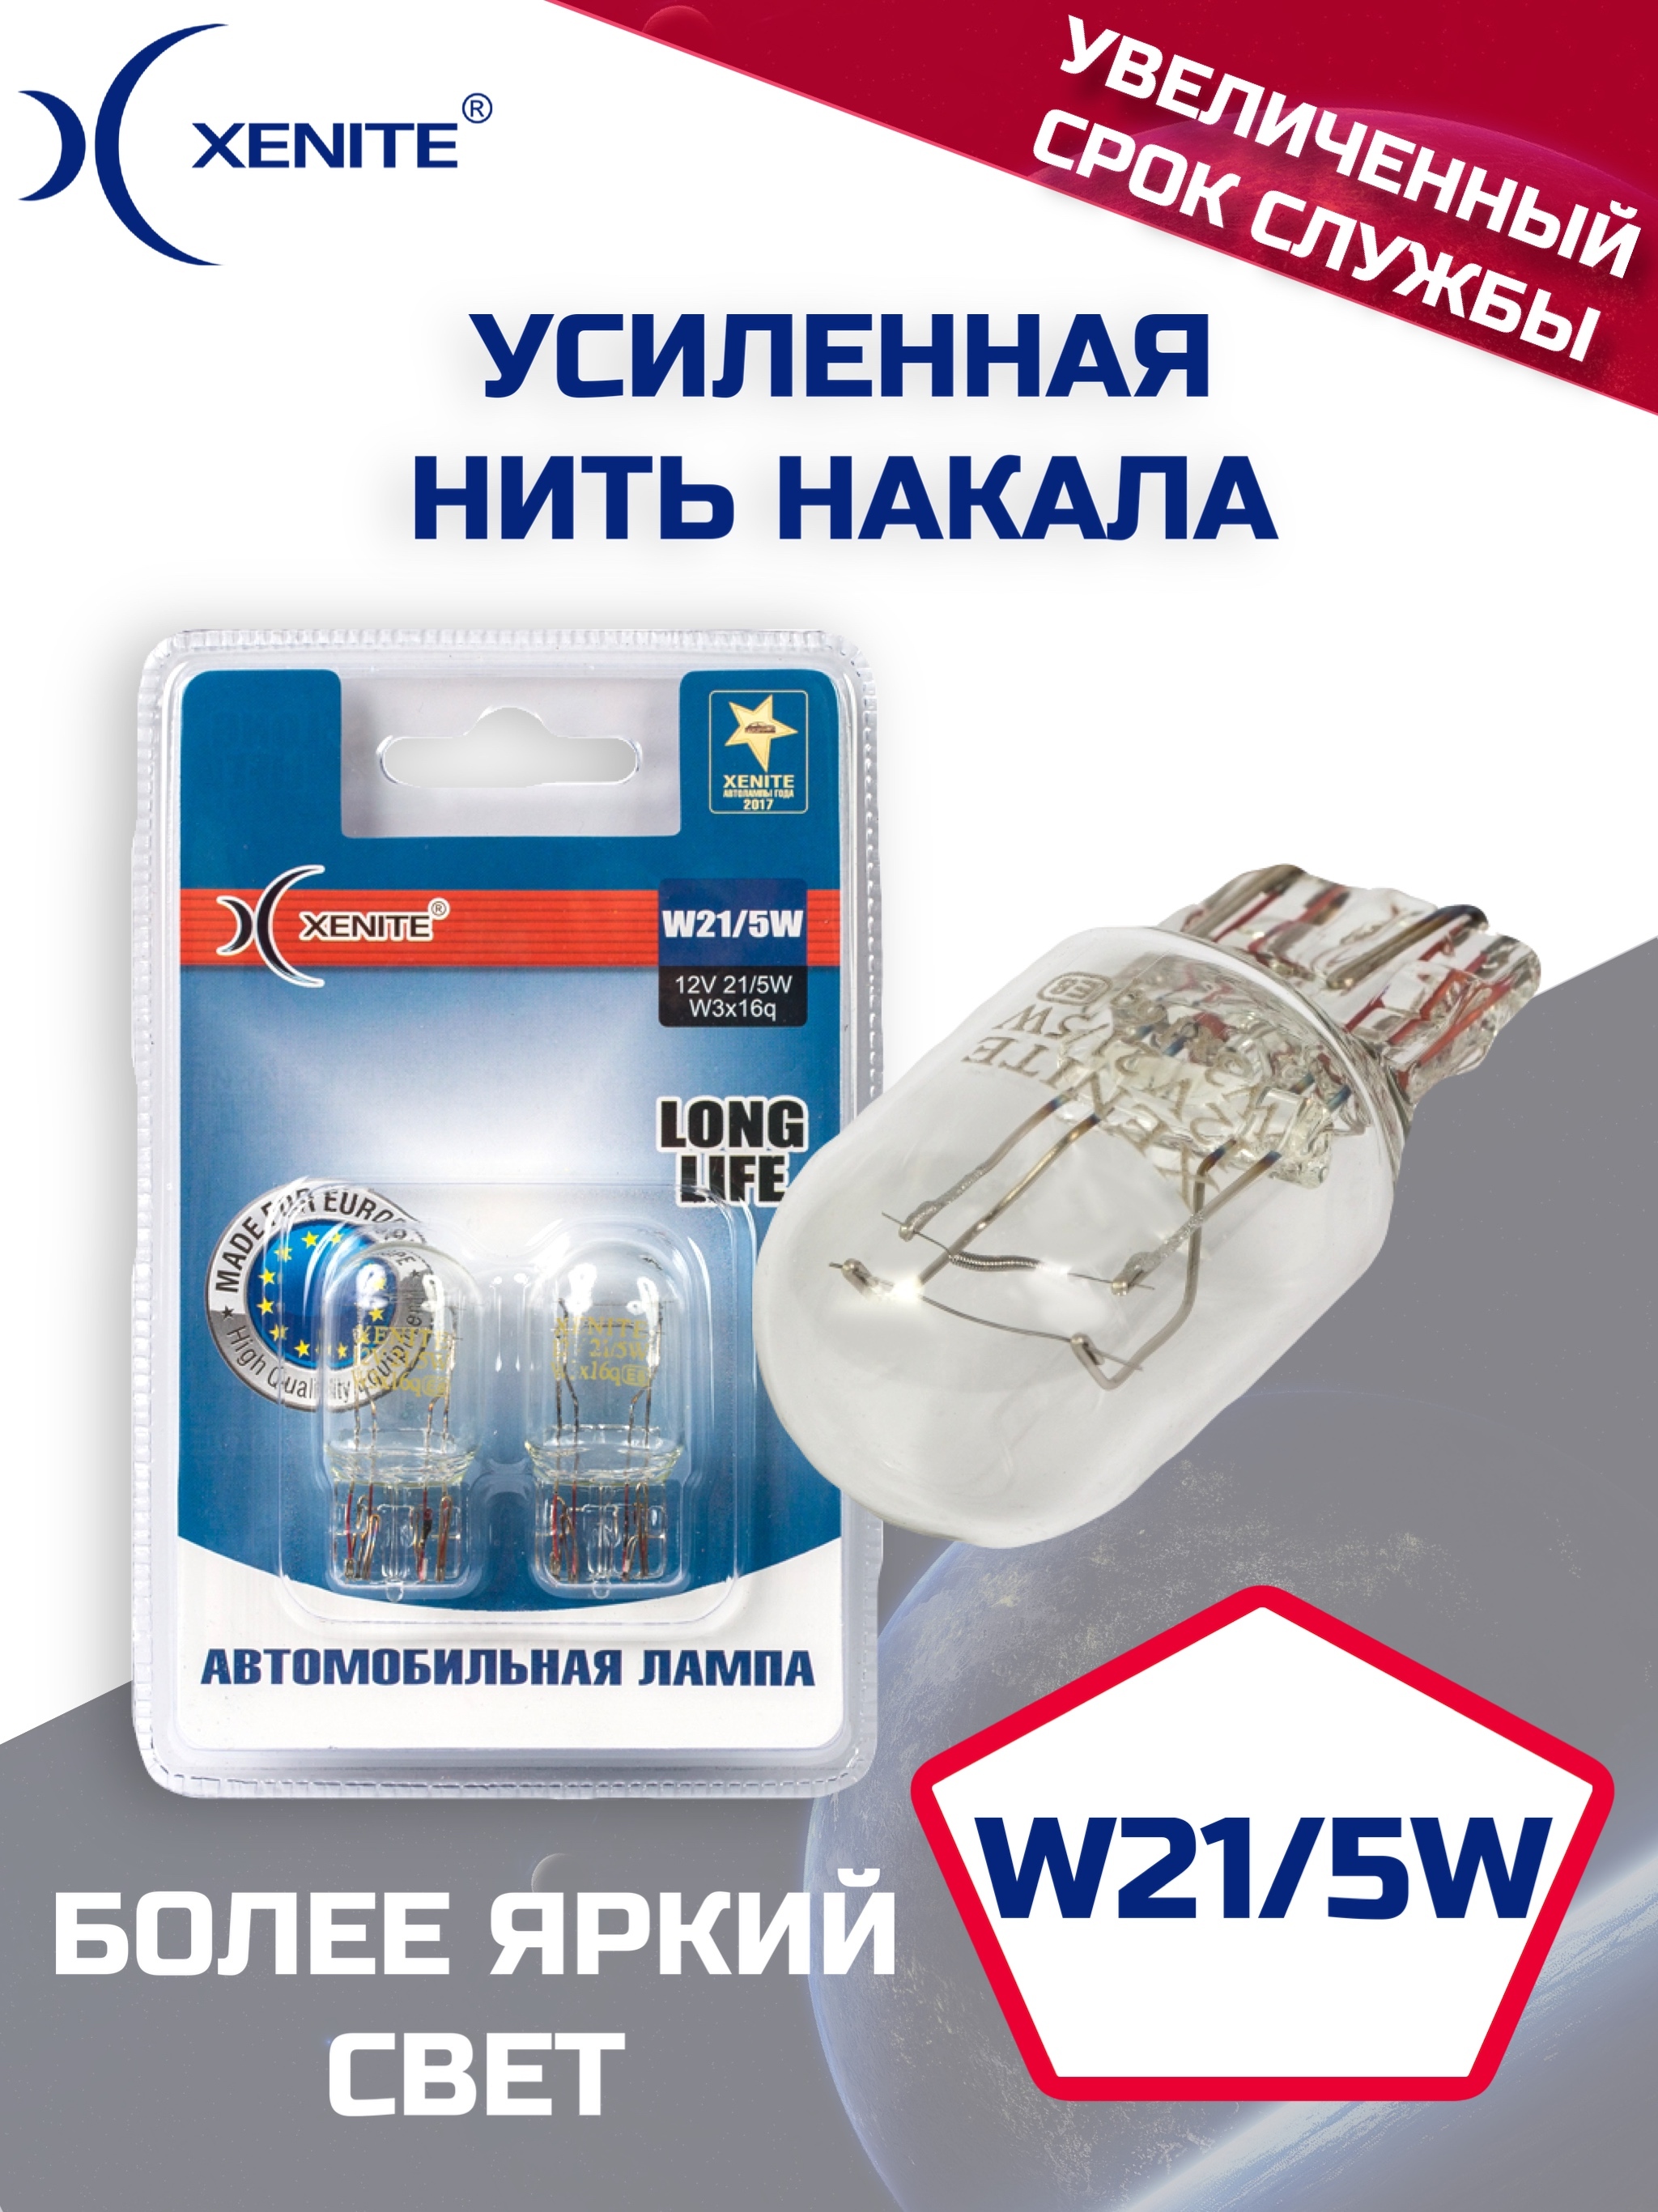 Lampe WB 12V 21/5W W3X16q